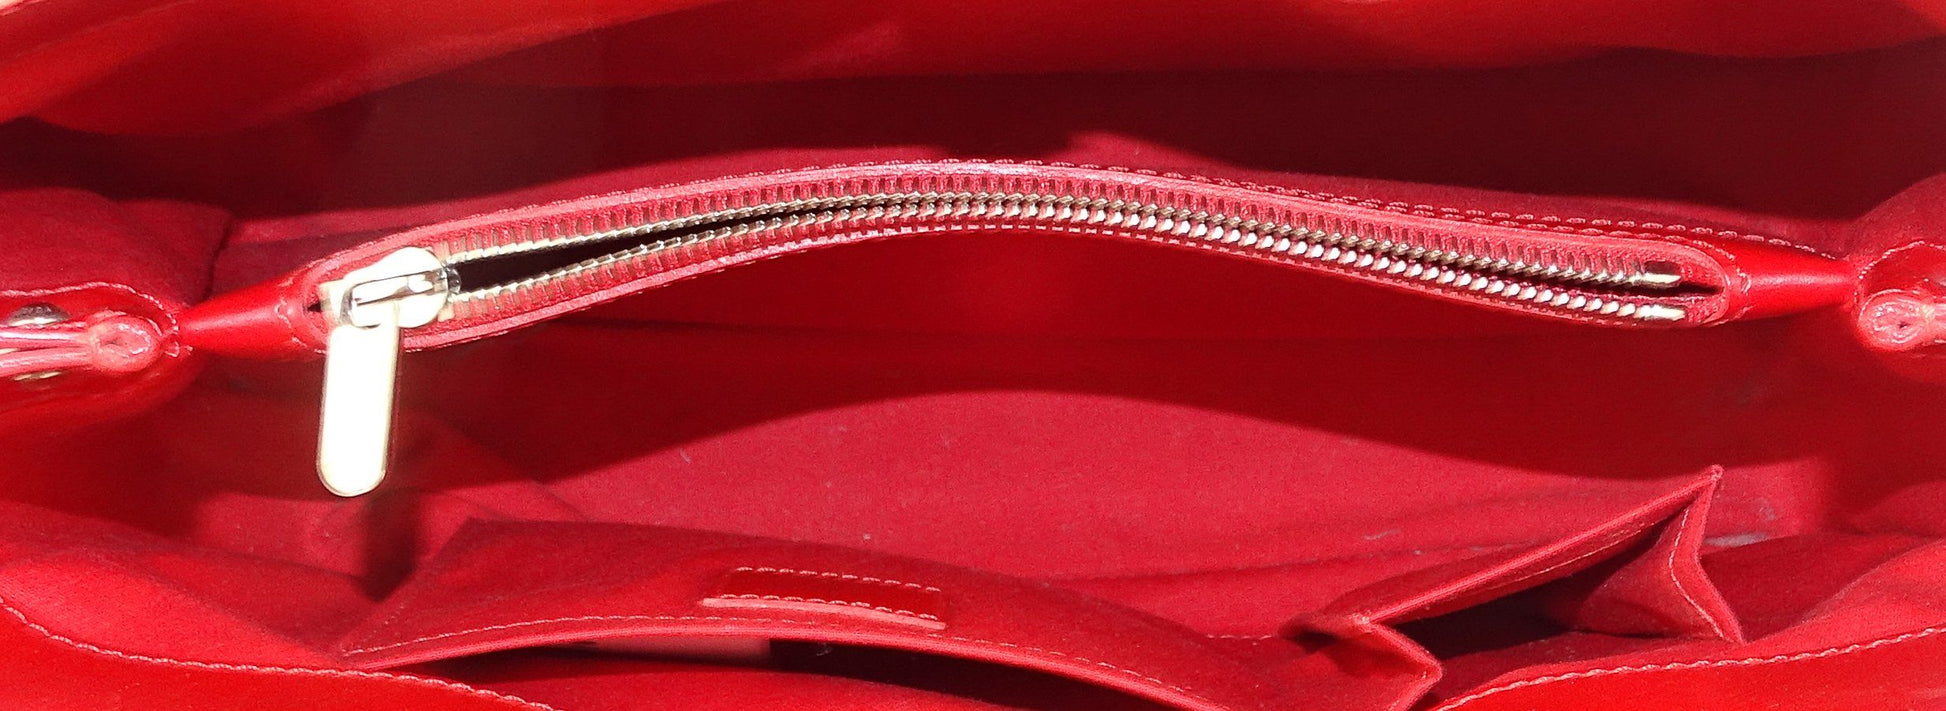 Louis Vuitton, Bags, Louis Vuitton Epi Passy Pm Red Bag